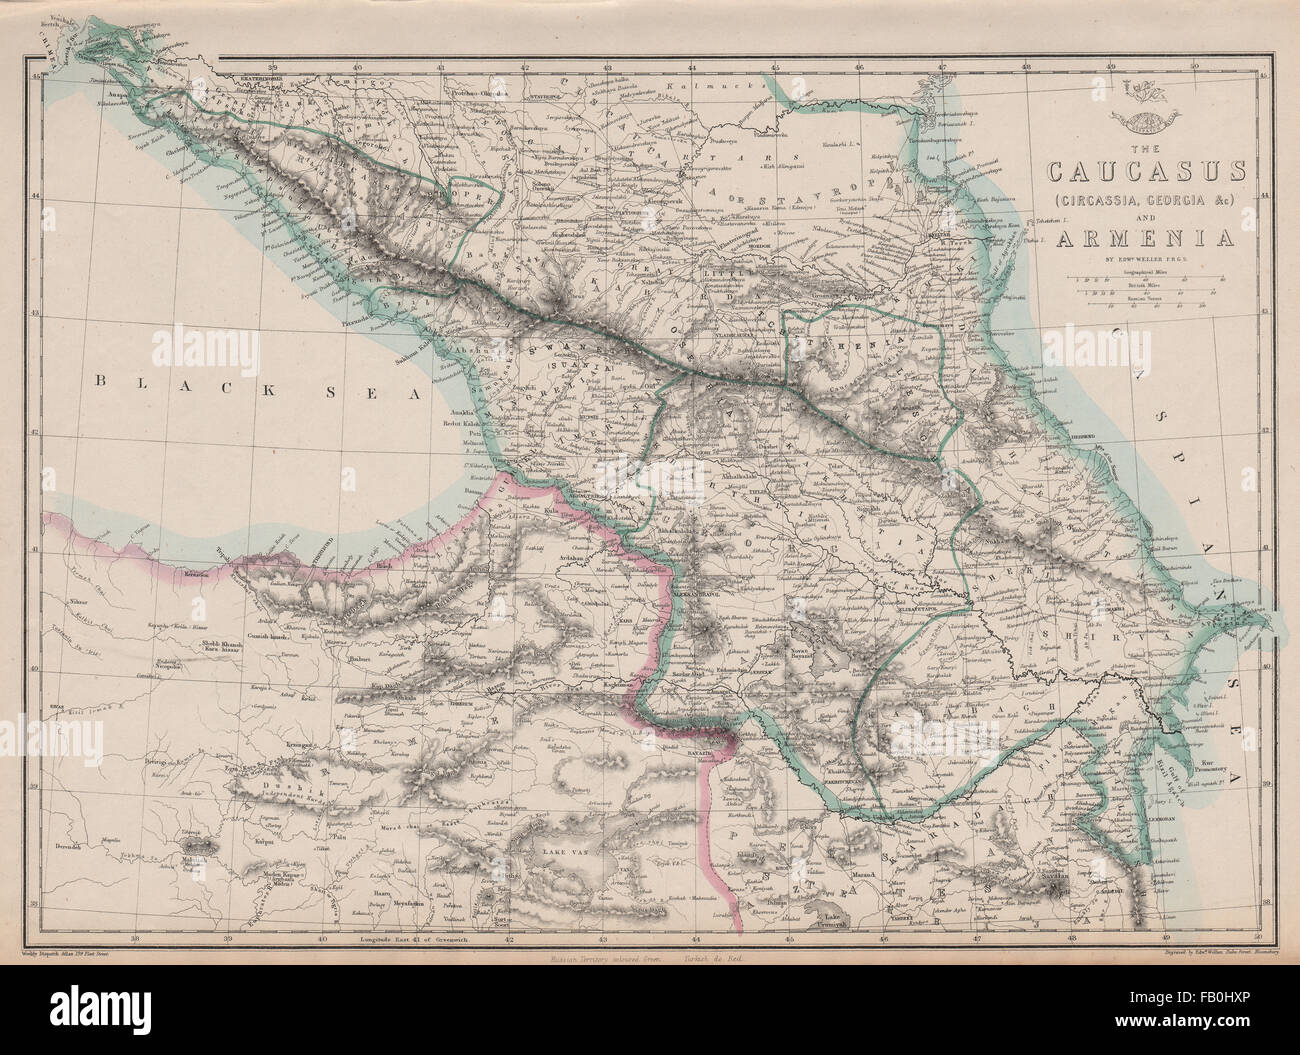 THE CAUCASUS & ARMENIA. Circassia Georgia Armenia. Azerbaijan. WELLER, 1862 map Stock Photo